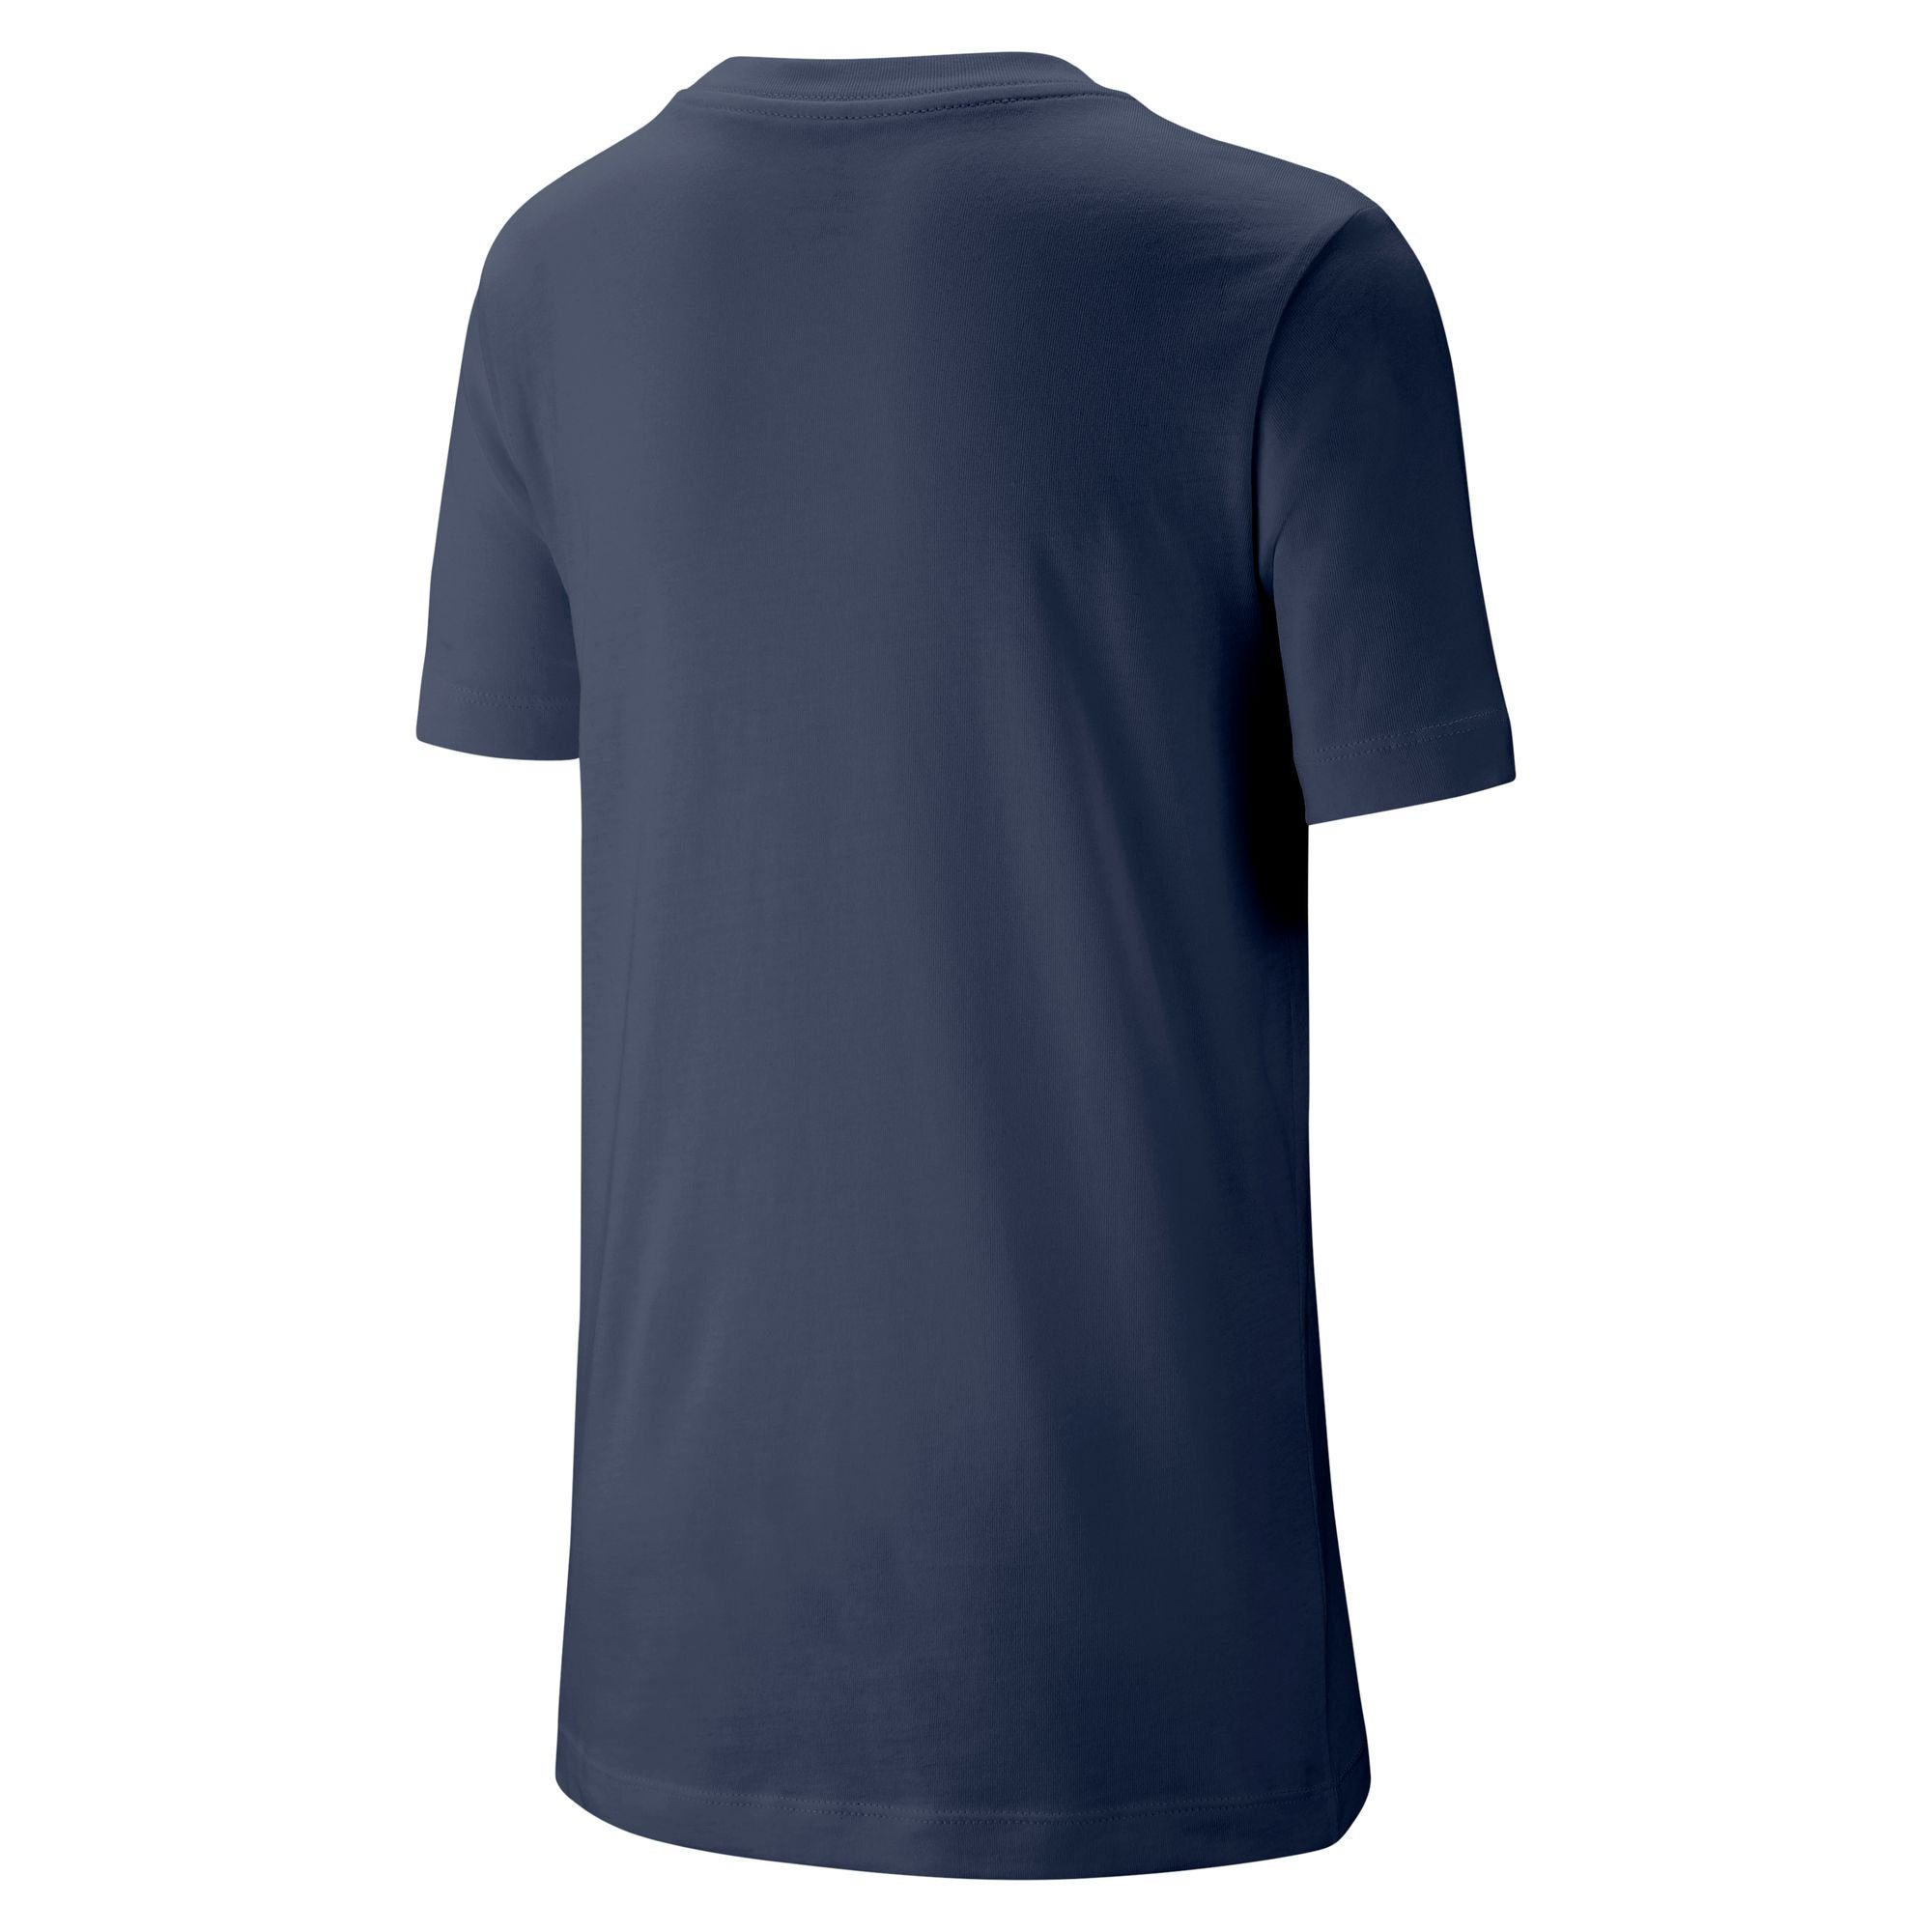 Sportswear Nike BIG T-SHIRT T-Shirt NAVY/WHITE MIDNIGHT COTTON KIDS'